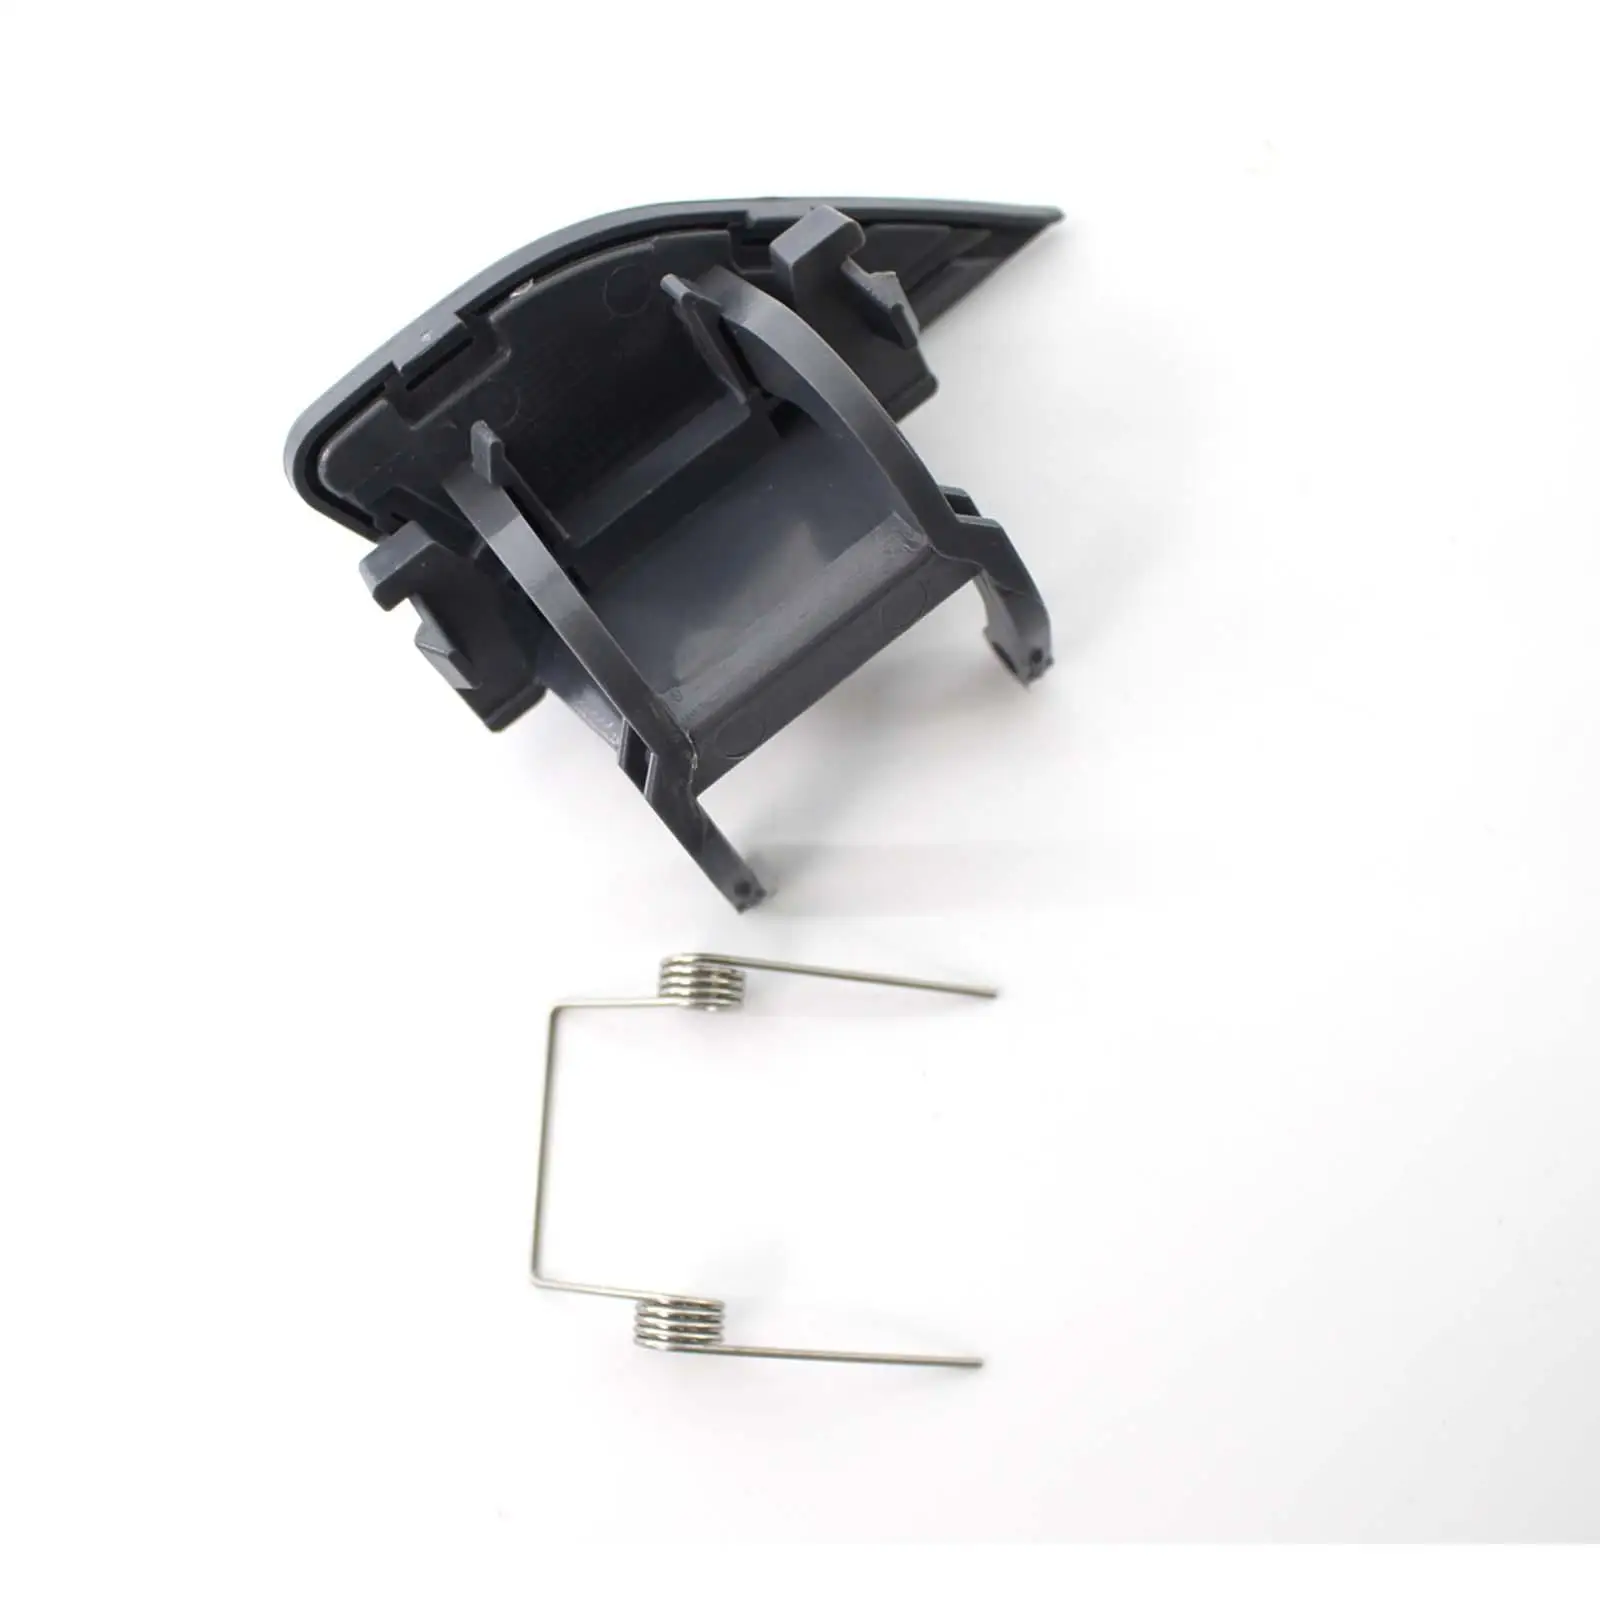 51117142161 Head Light Washer Cover Plastic Car Supplies Left Black Headlamp Spray Cover Fit for E65 E66 2005-2008 Headlamp